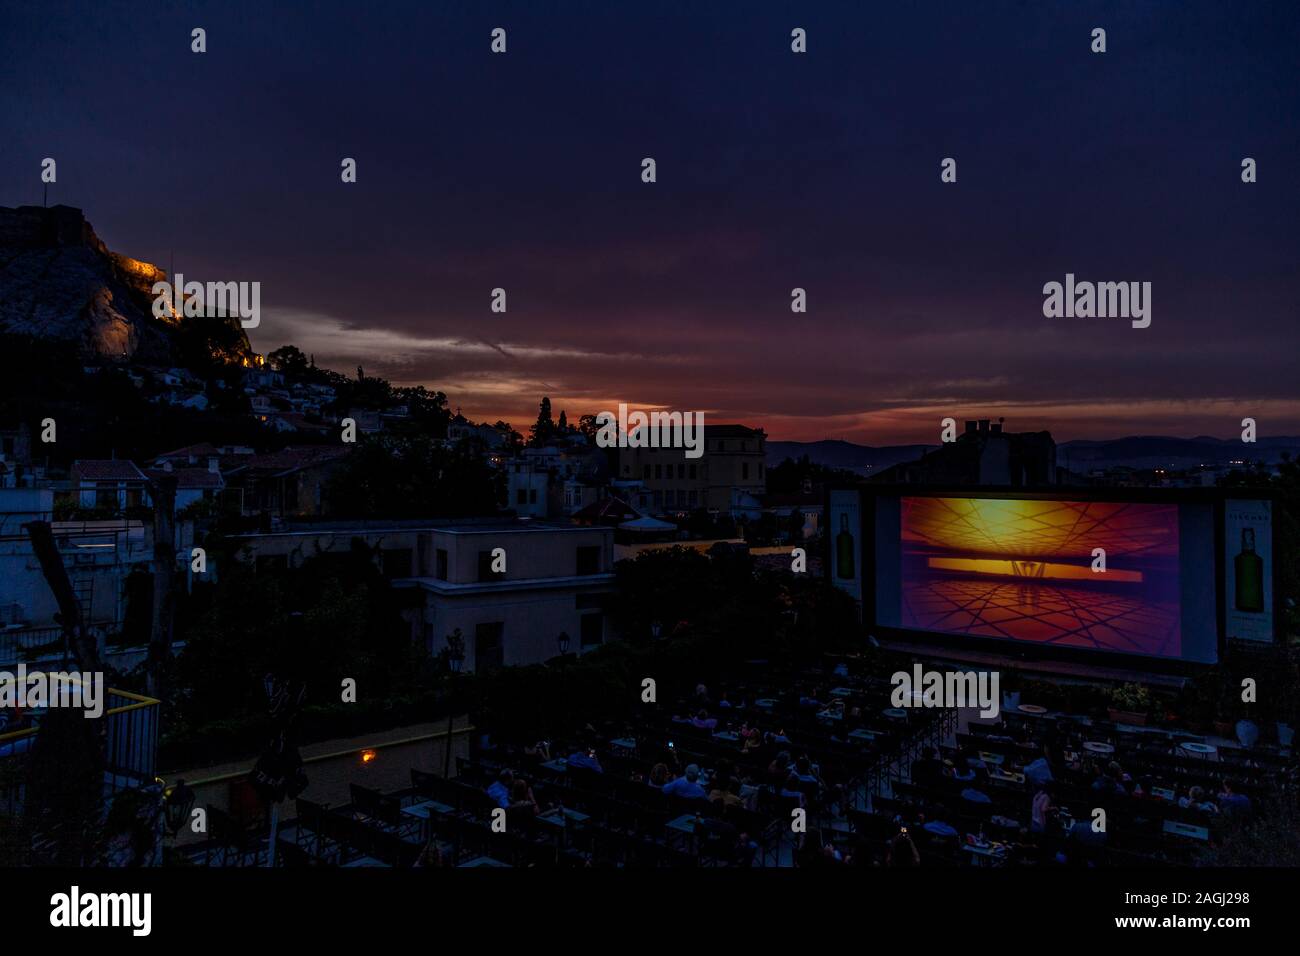 Cine Paris open-air theatre in Athens, Greece Stock Photo